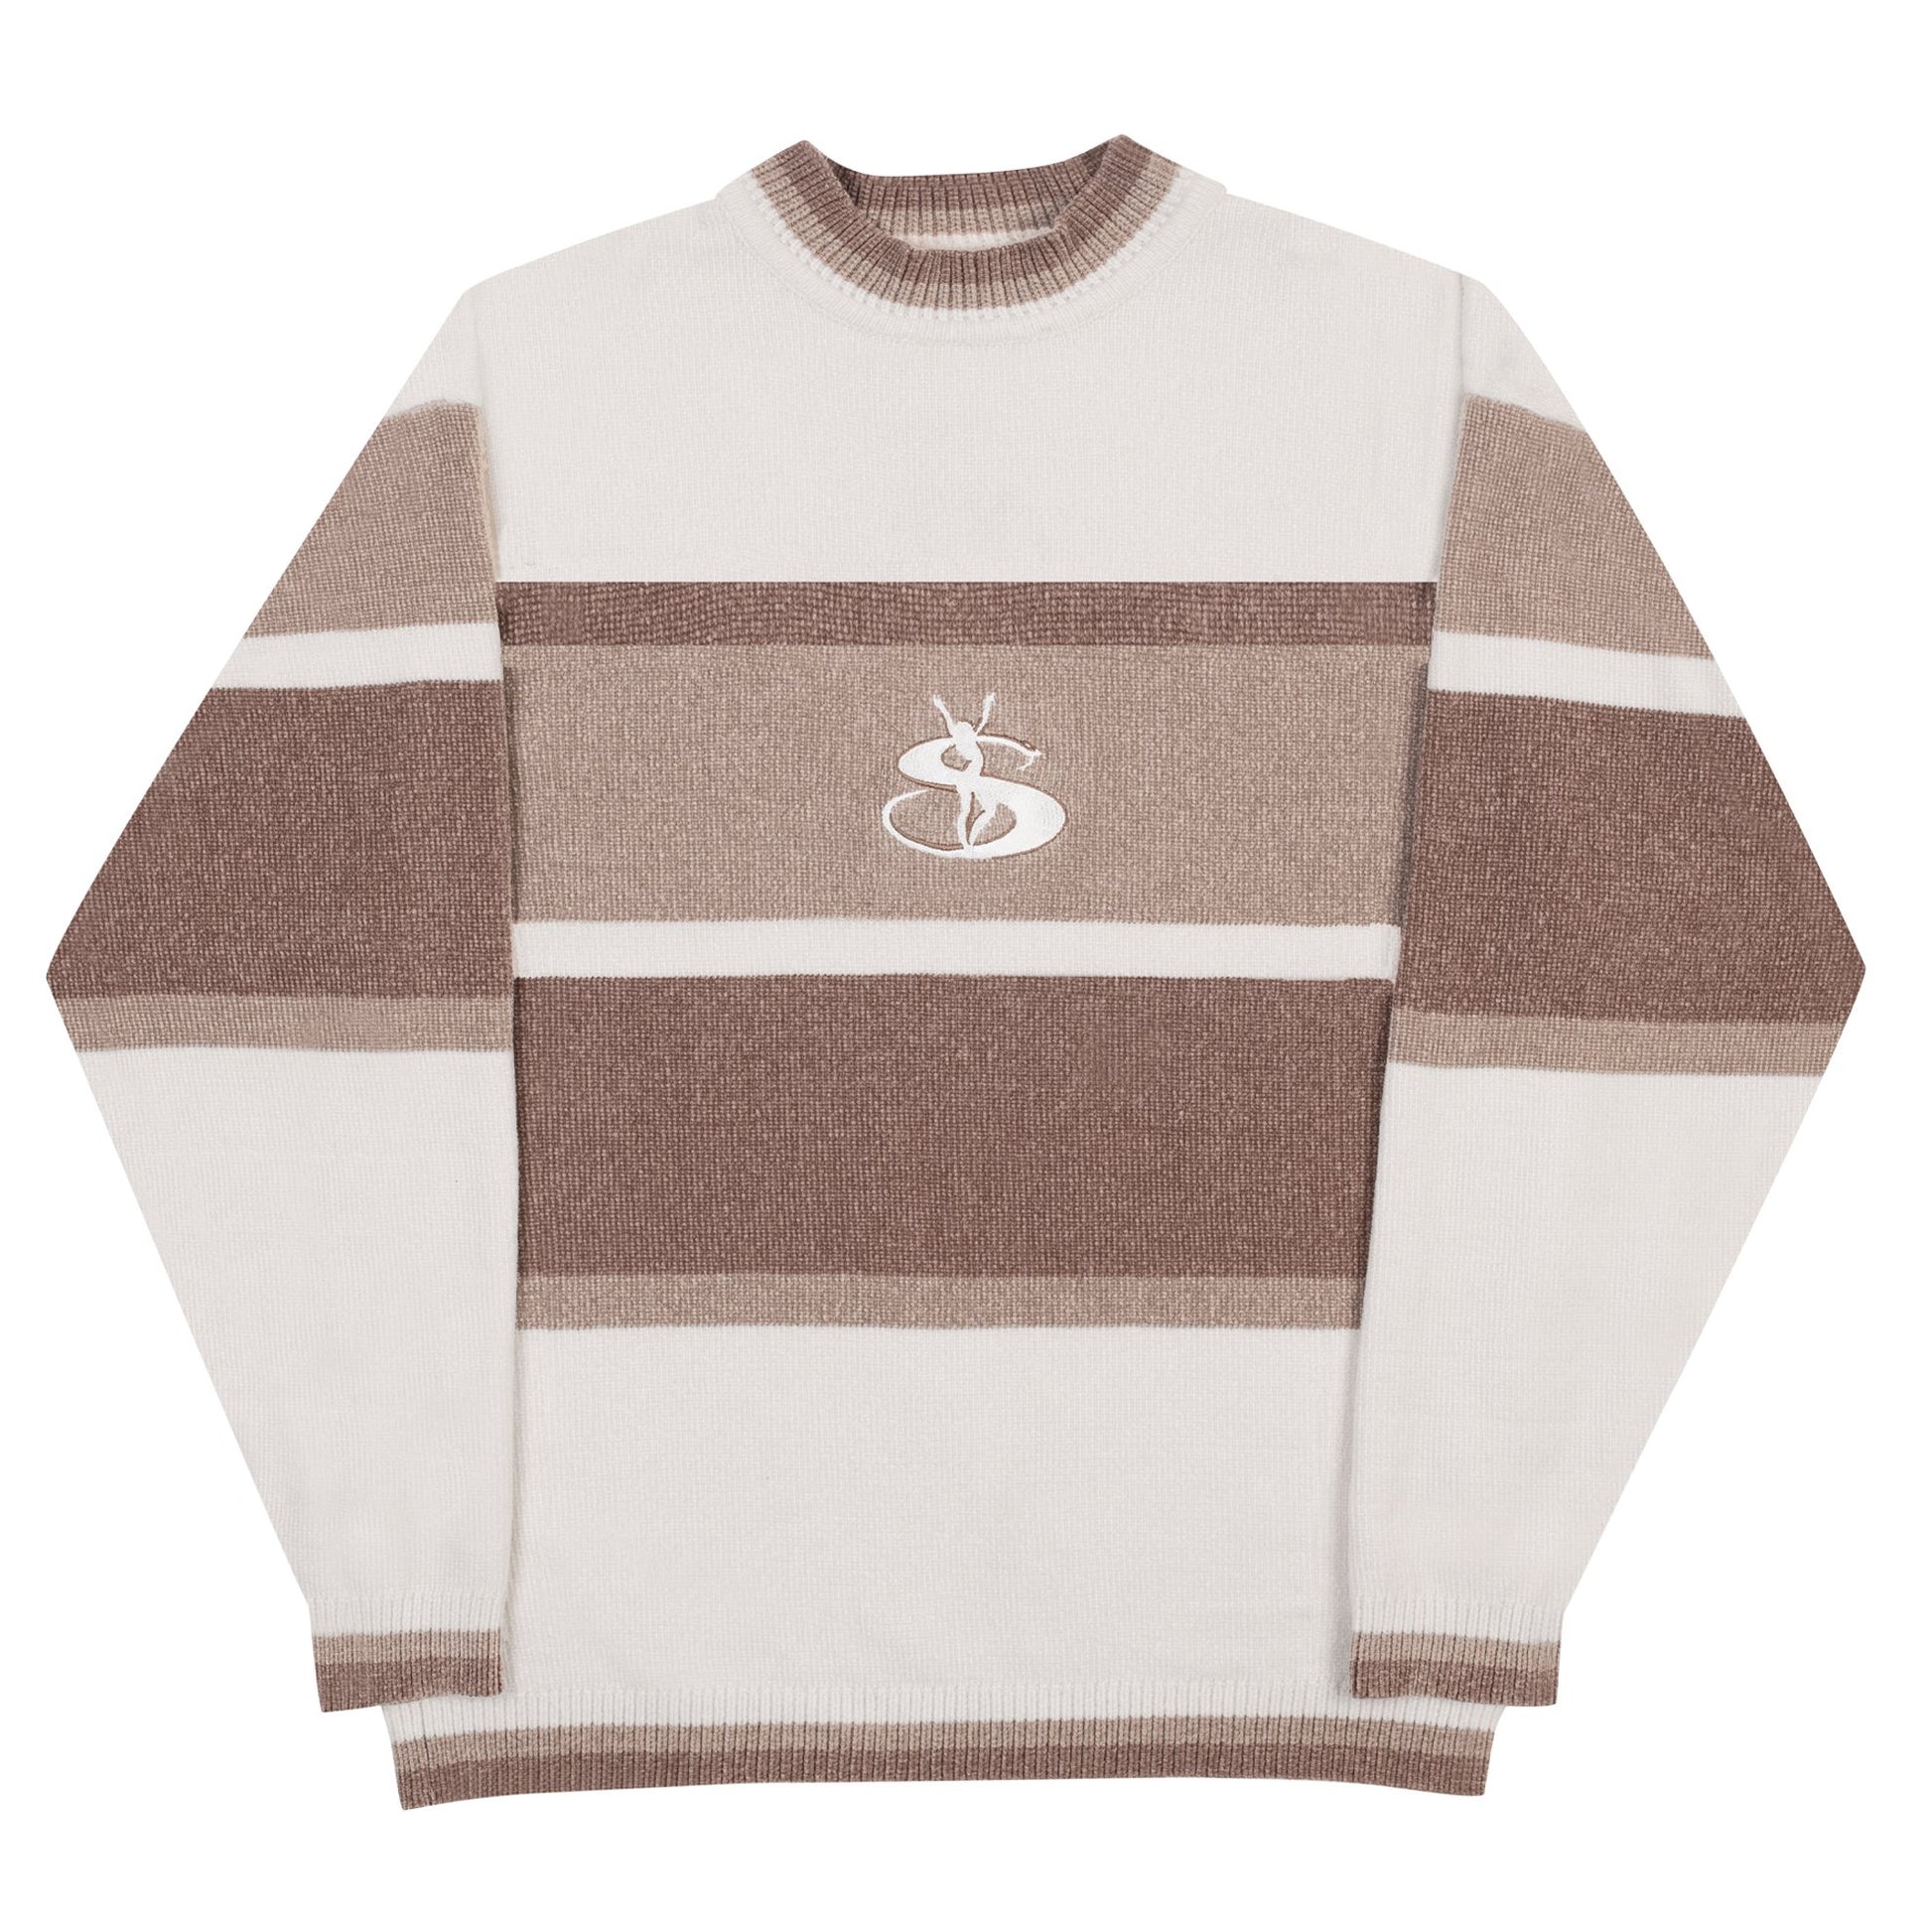 Yardsale Phantasy Chenille Sweater White-